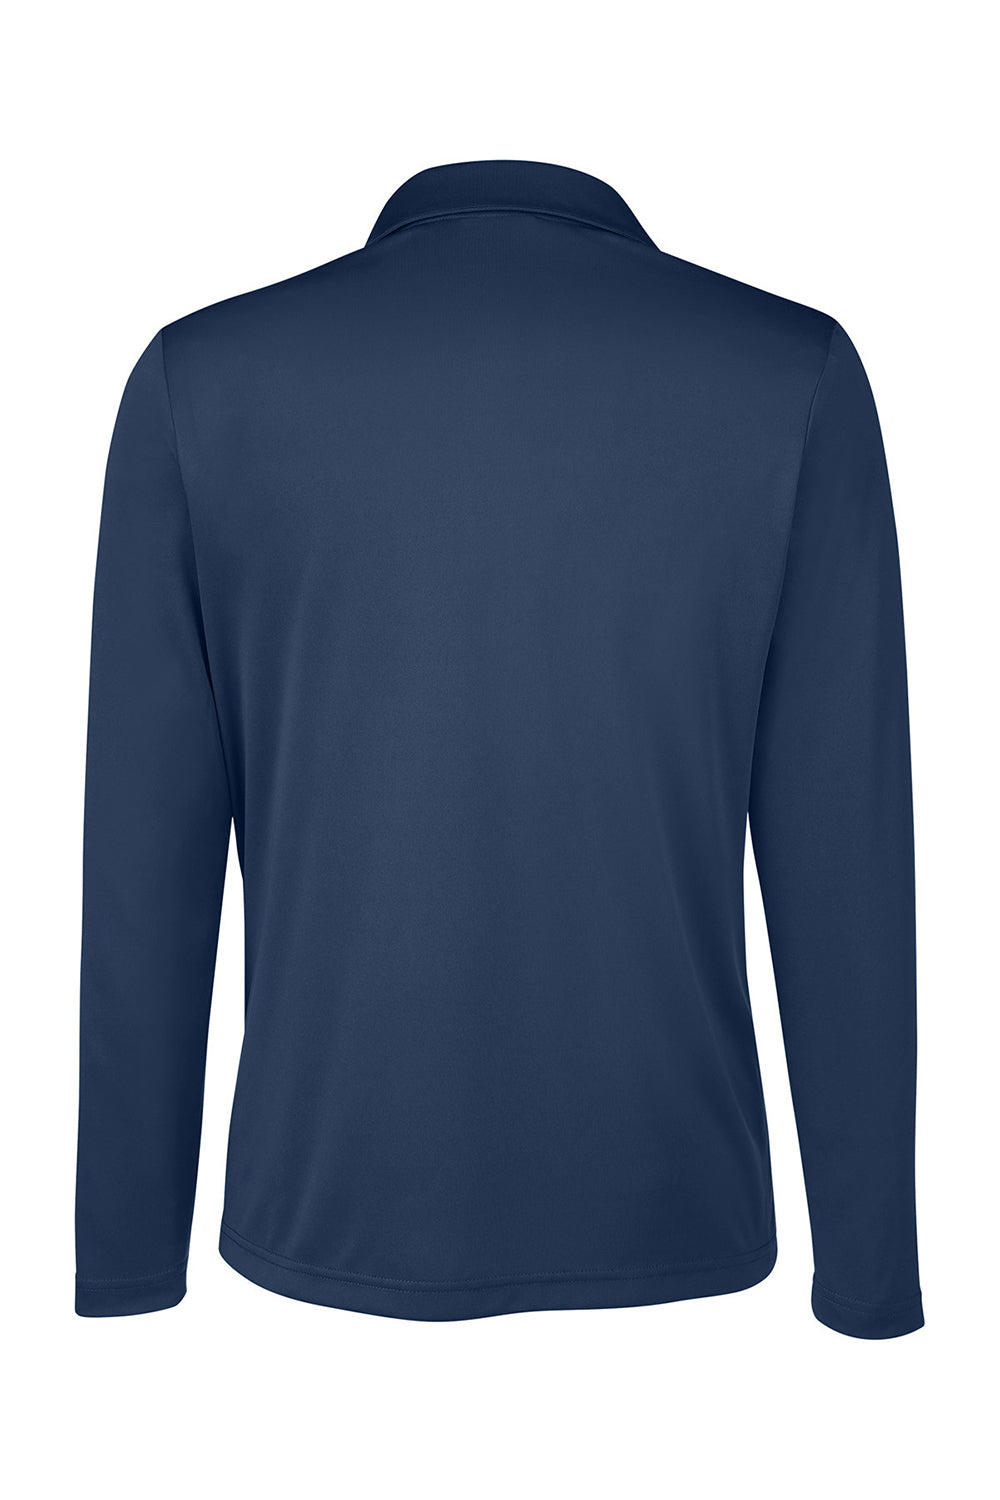 Team 365 TT51LW Womens Zone Sonic Moisture Wicking Long Sleeve Polo Shirt Dark Navy Blue Flat Back